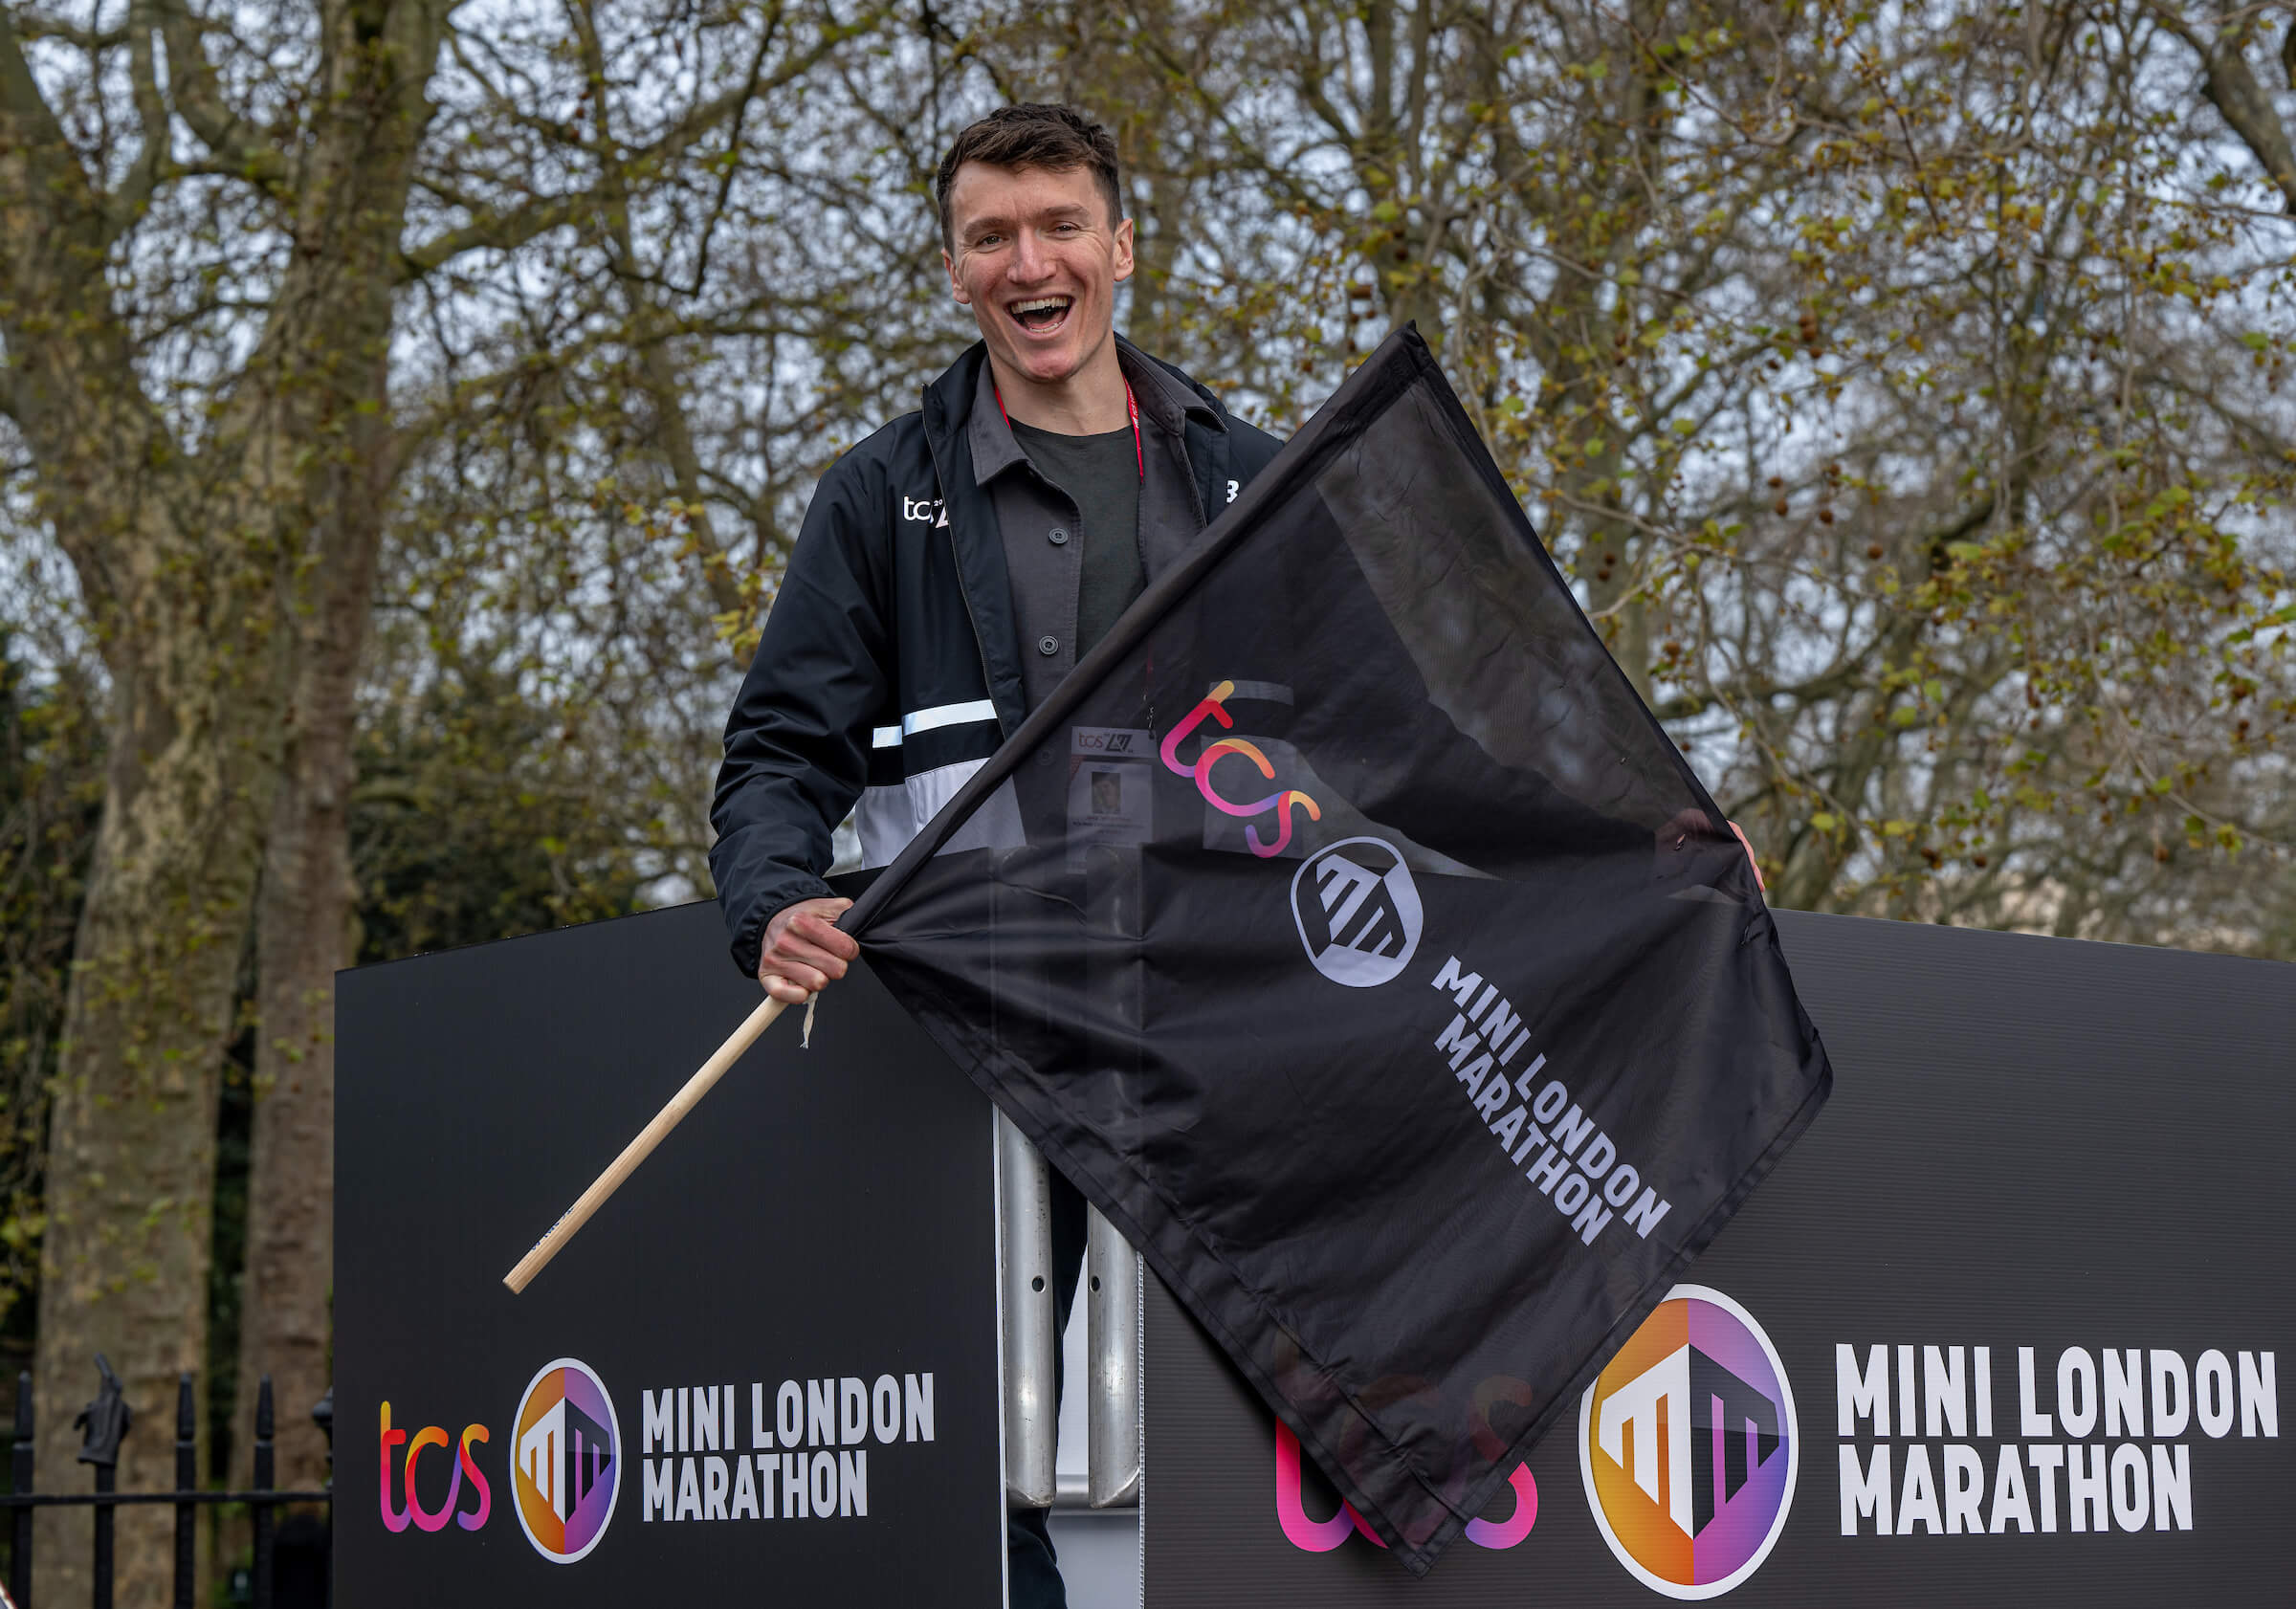 Jake Wightman starts the TCS Mini London Marathon